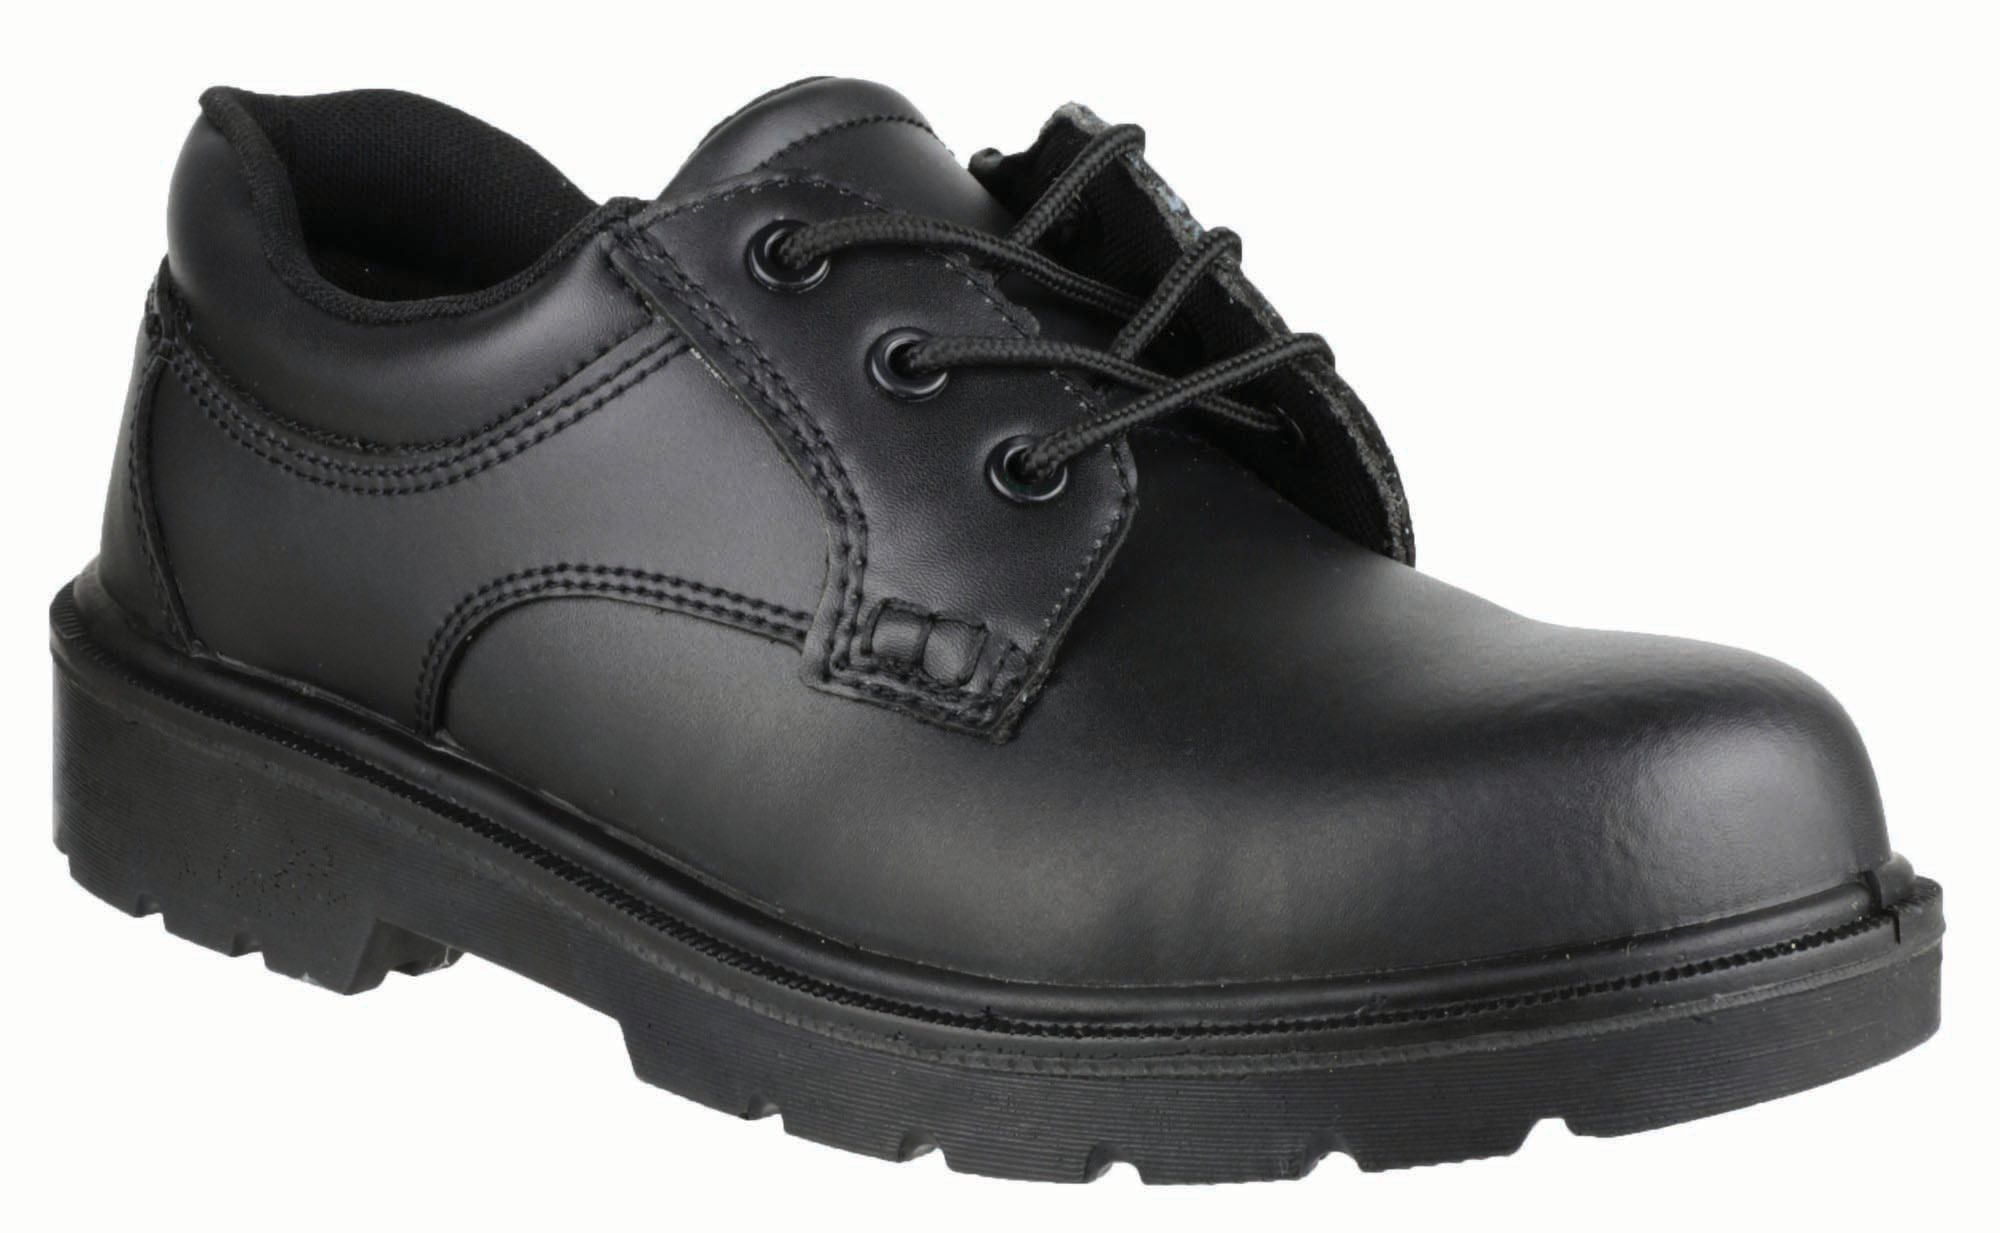 Image of Amblers Safety FS38C Safety Shoe - Black Size 8